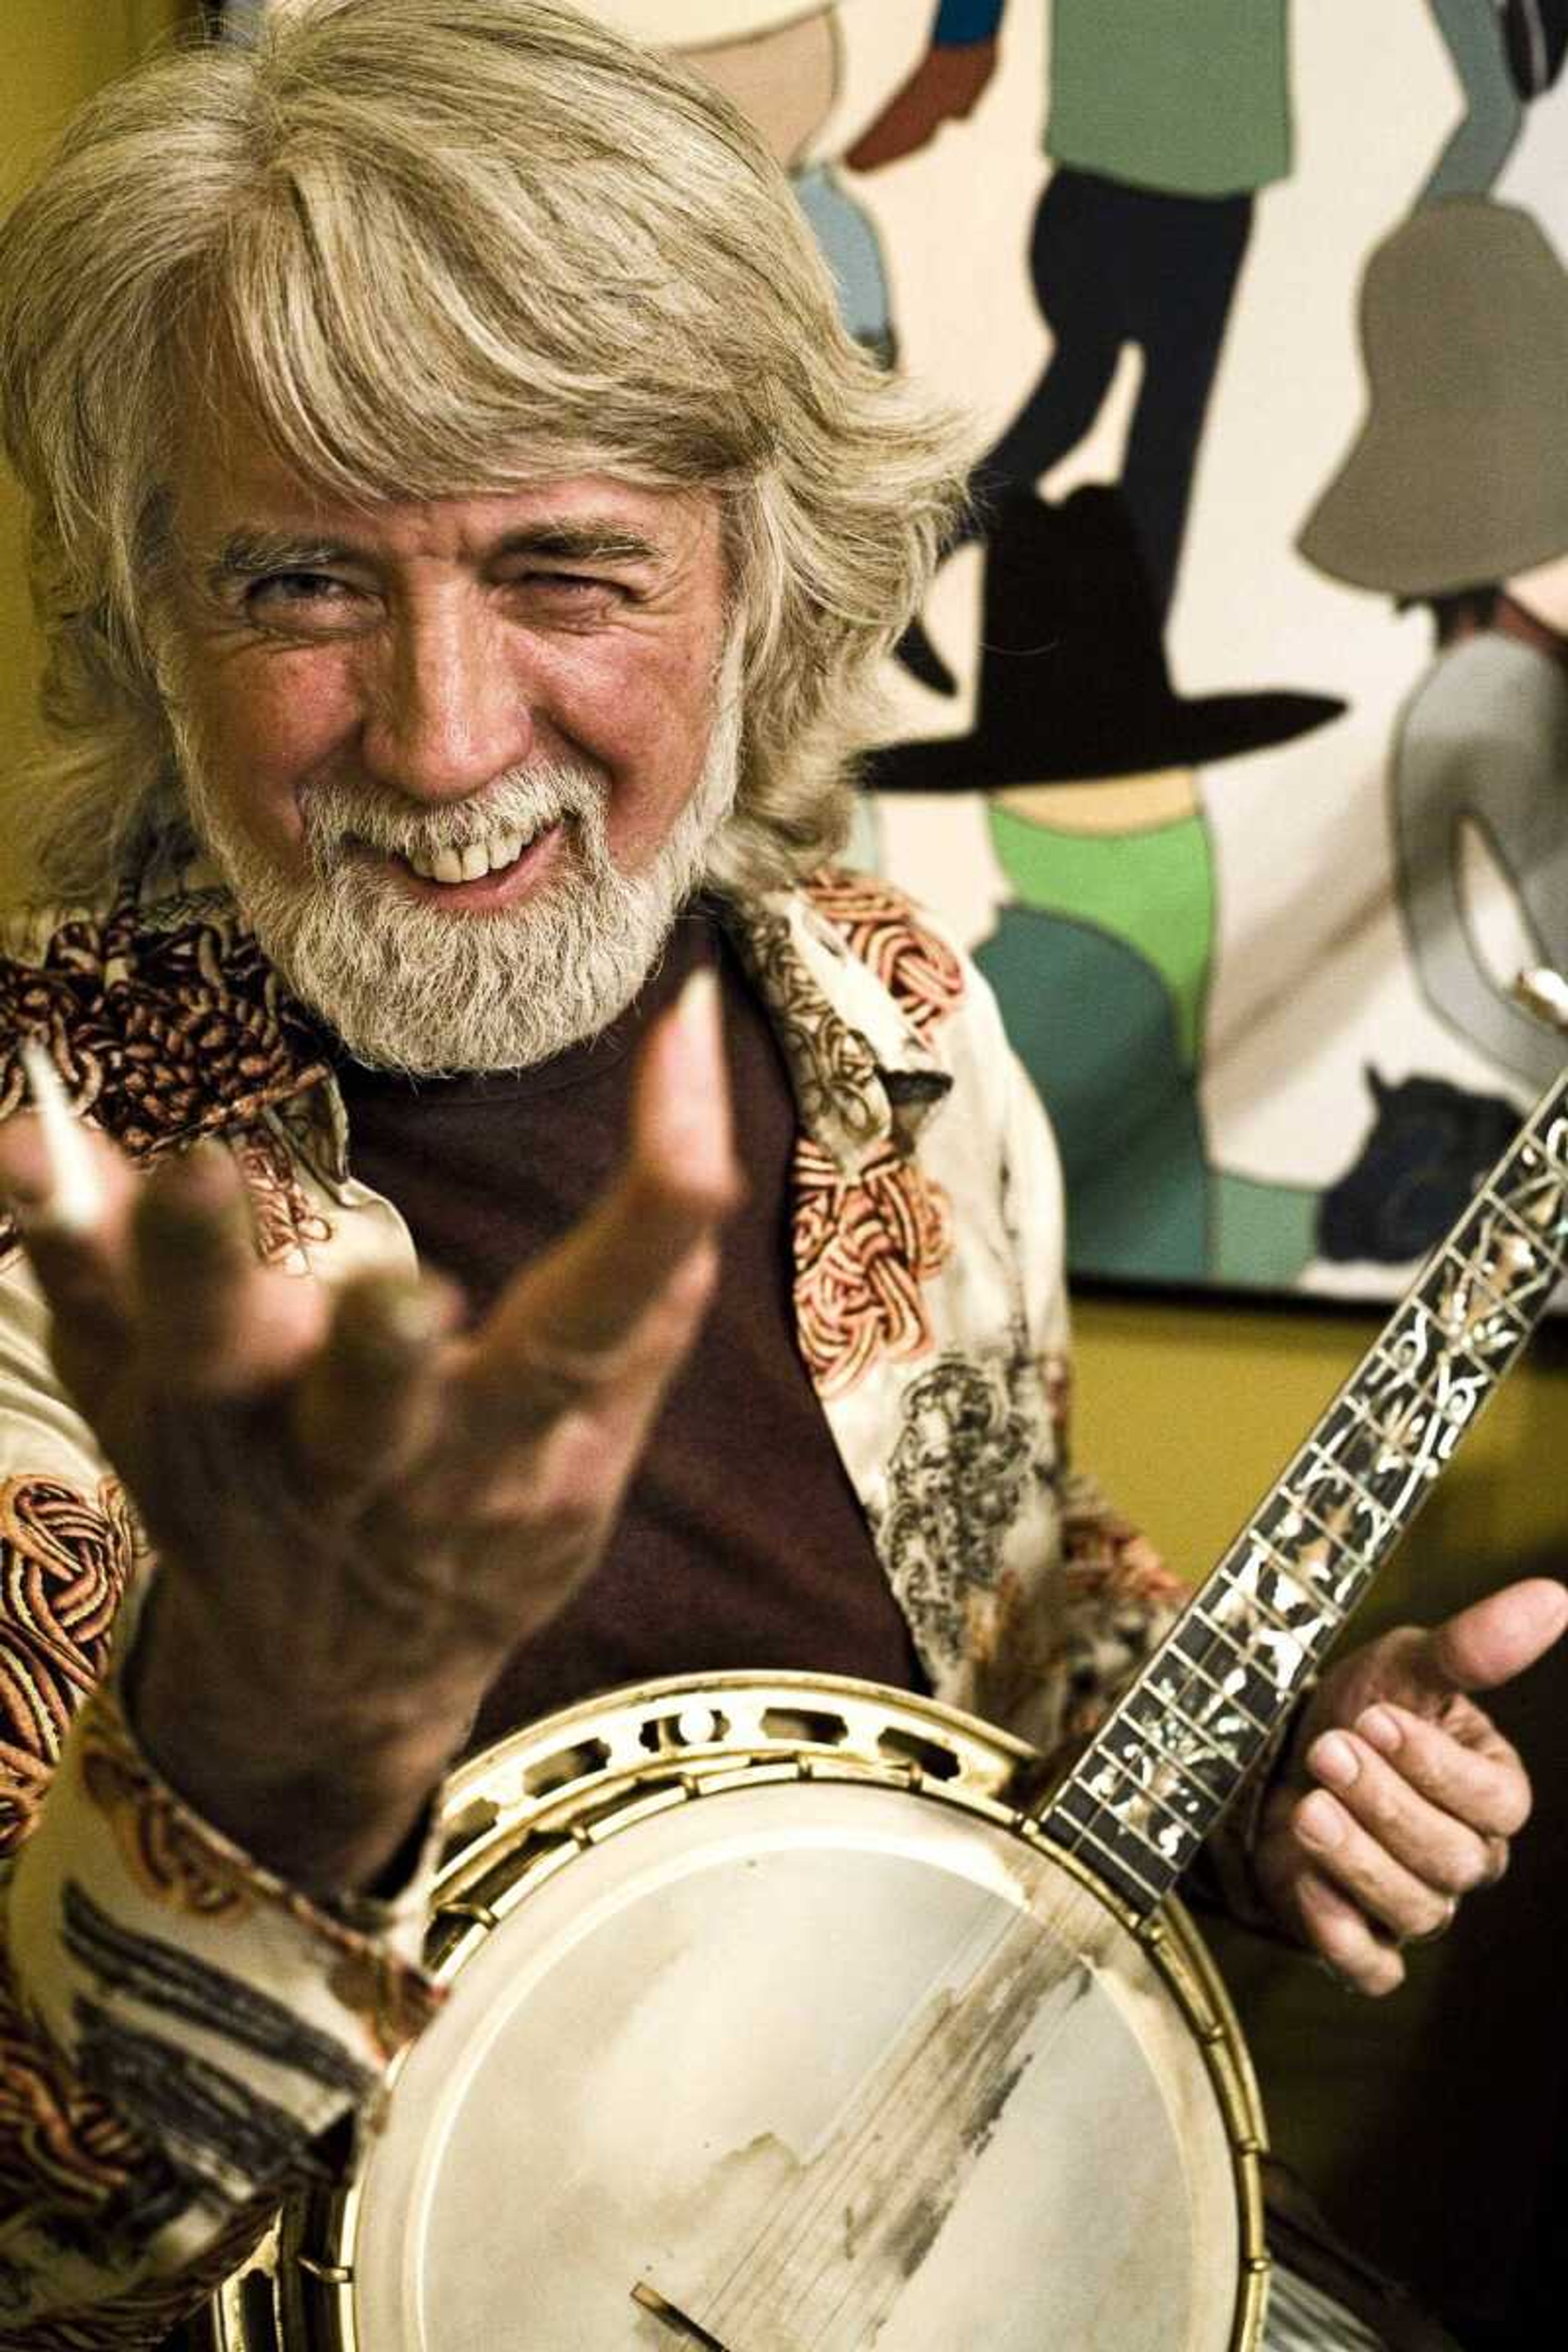 Nitty Gritty Dirt Band Founder John McEuen displays his banjo.